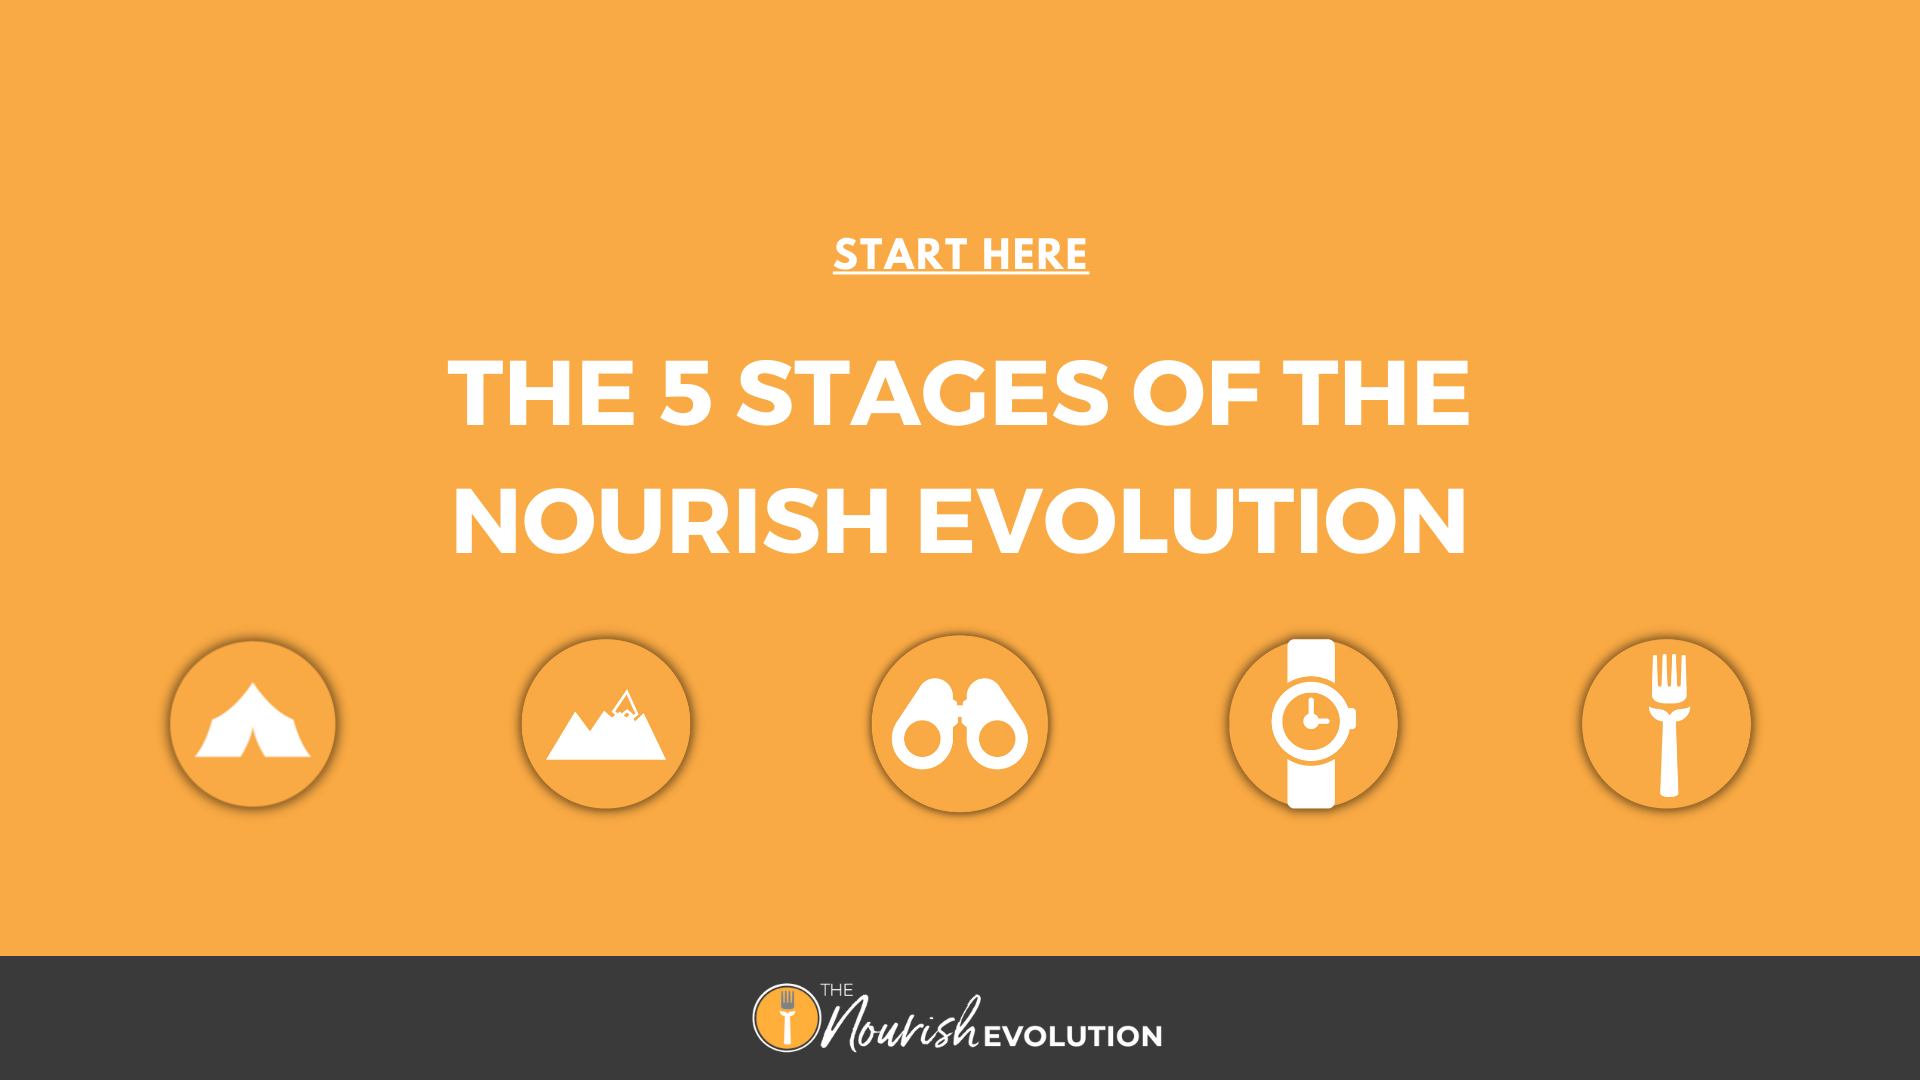 START YOUR NOURISH EVOLUTION